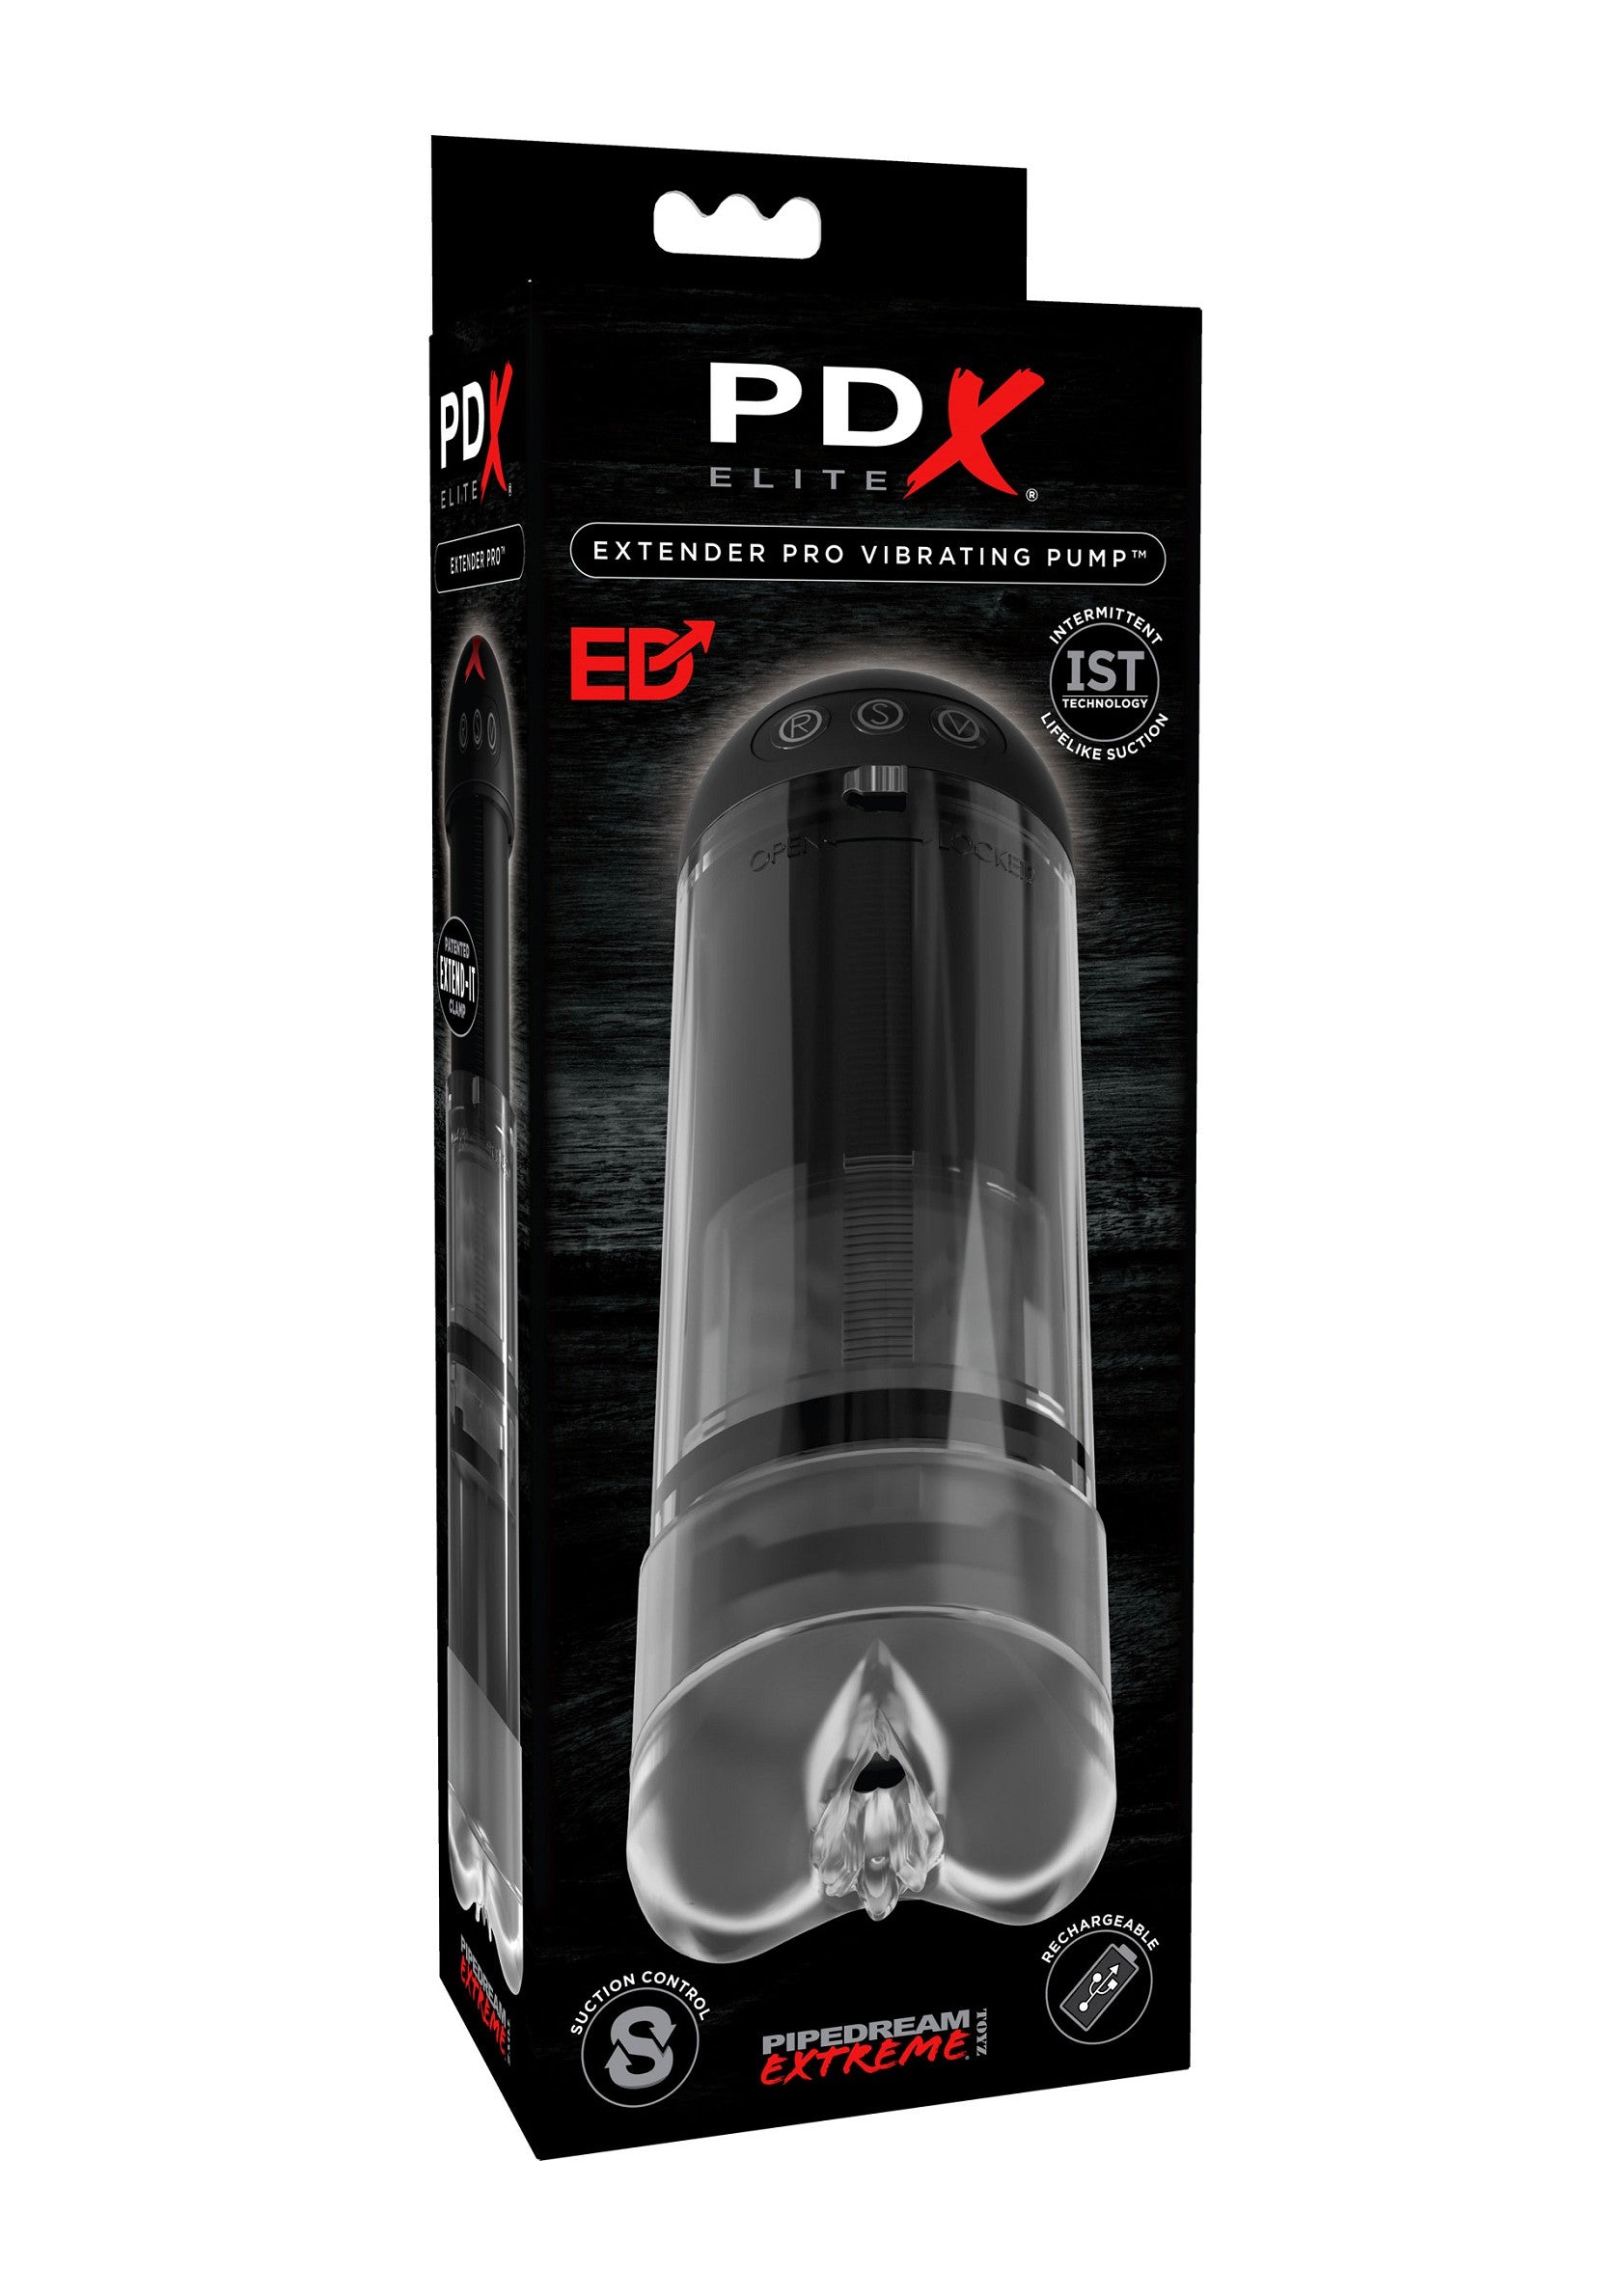 Pipedream PDX Elite Extender Vibrating Penis Pump TRANSPA - 5